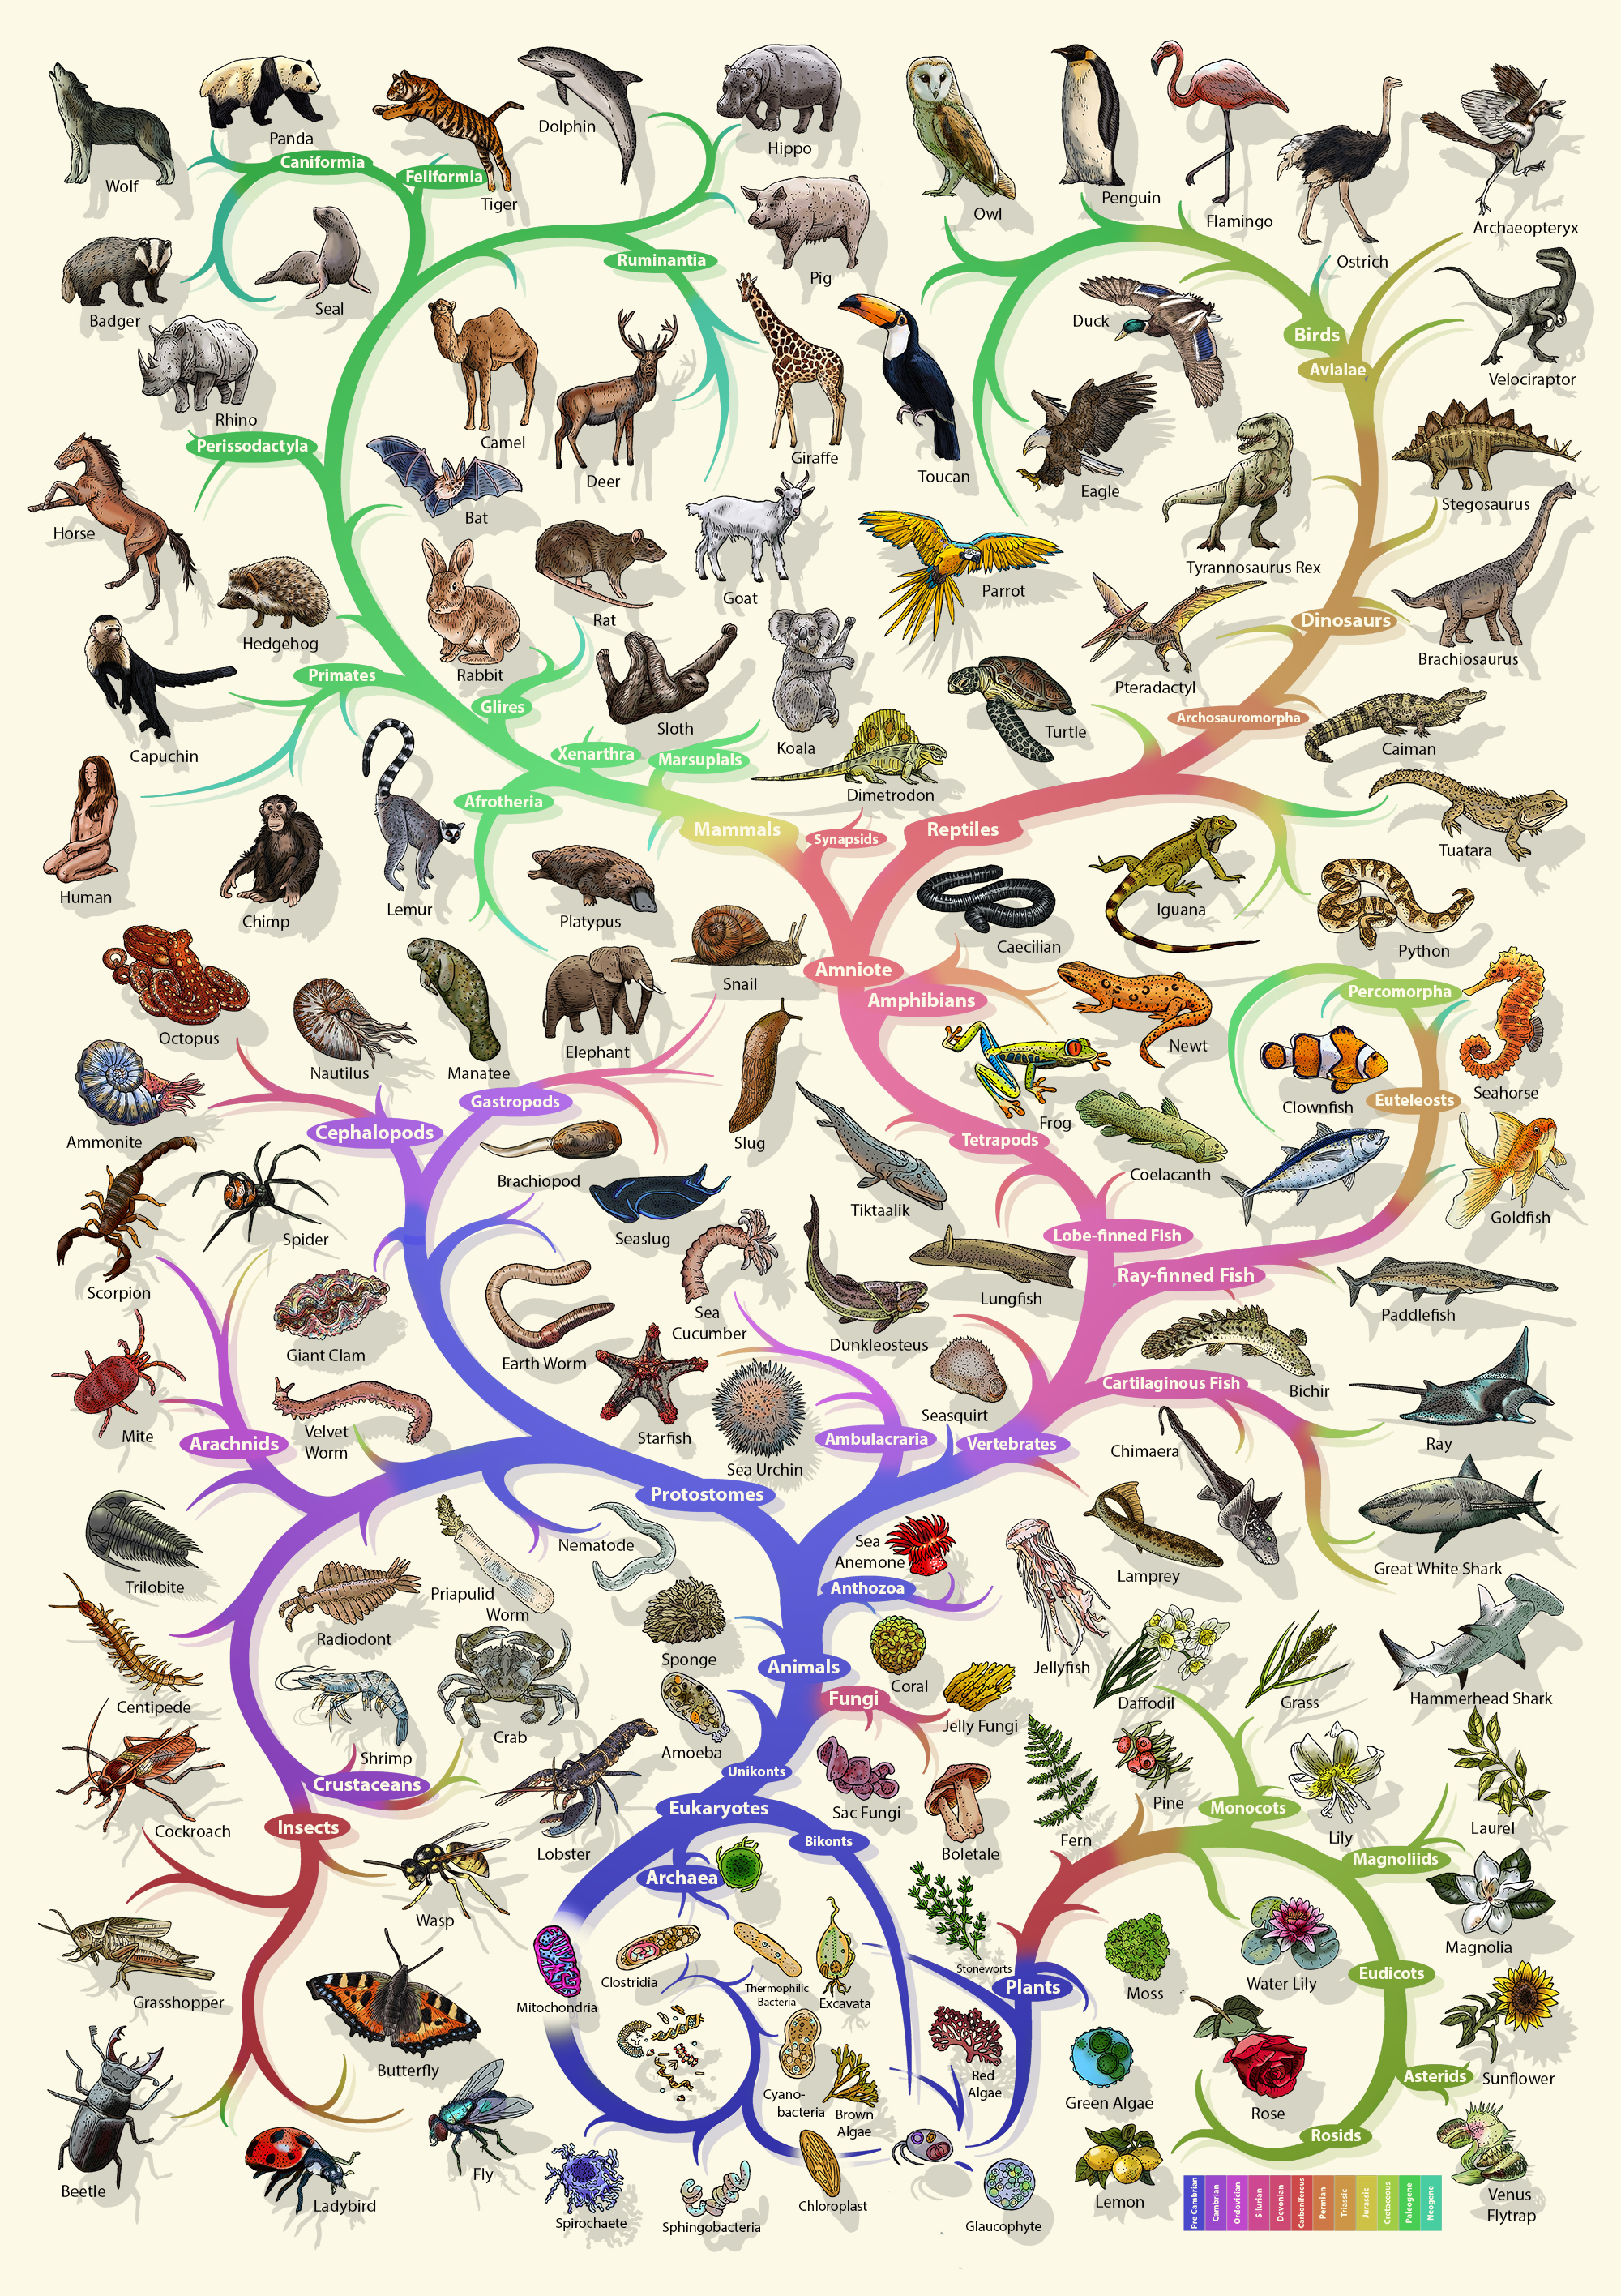 Evolution tree of life poster